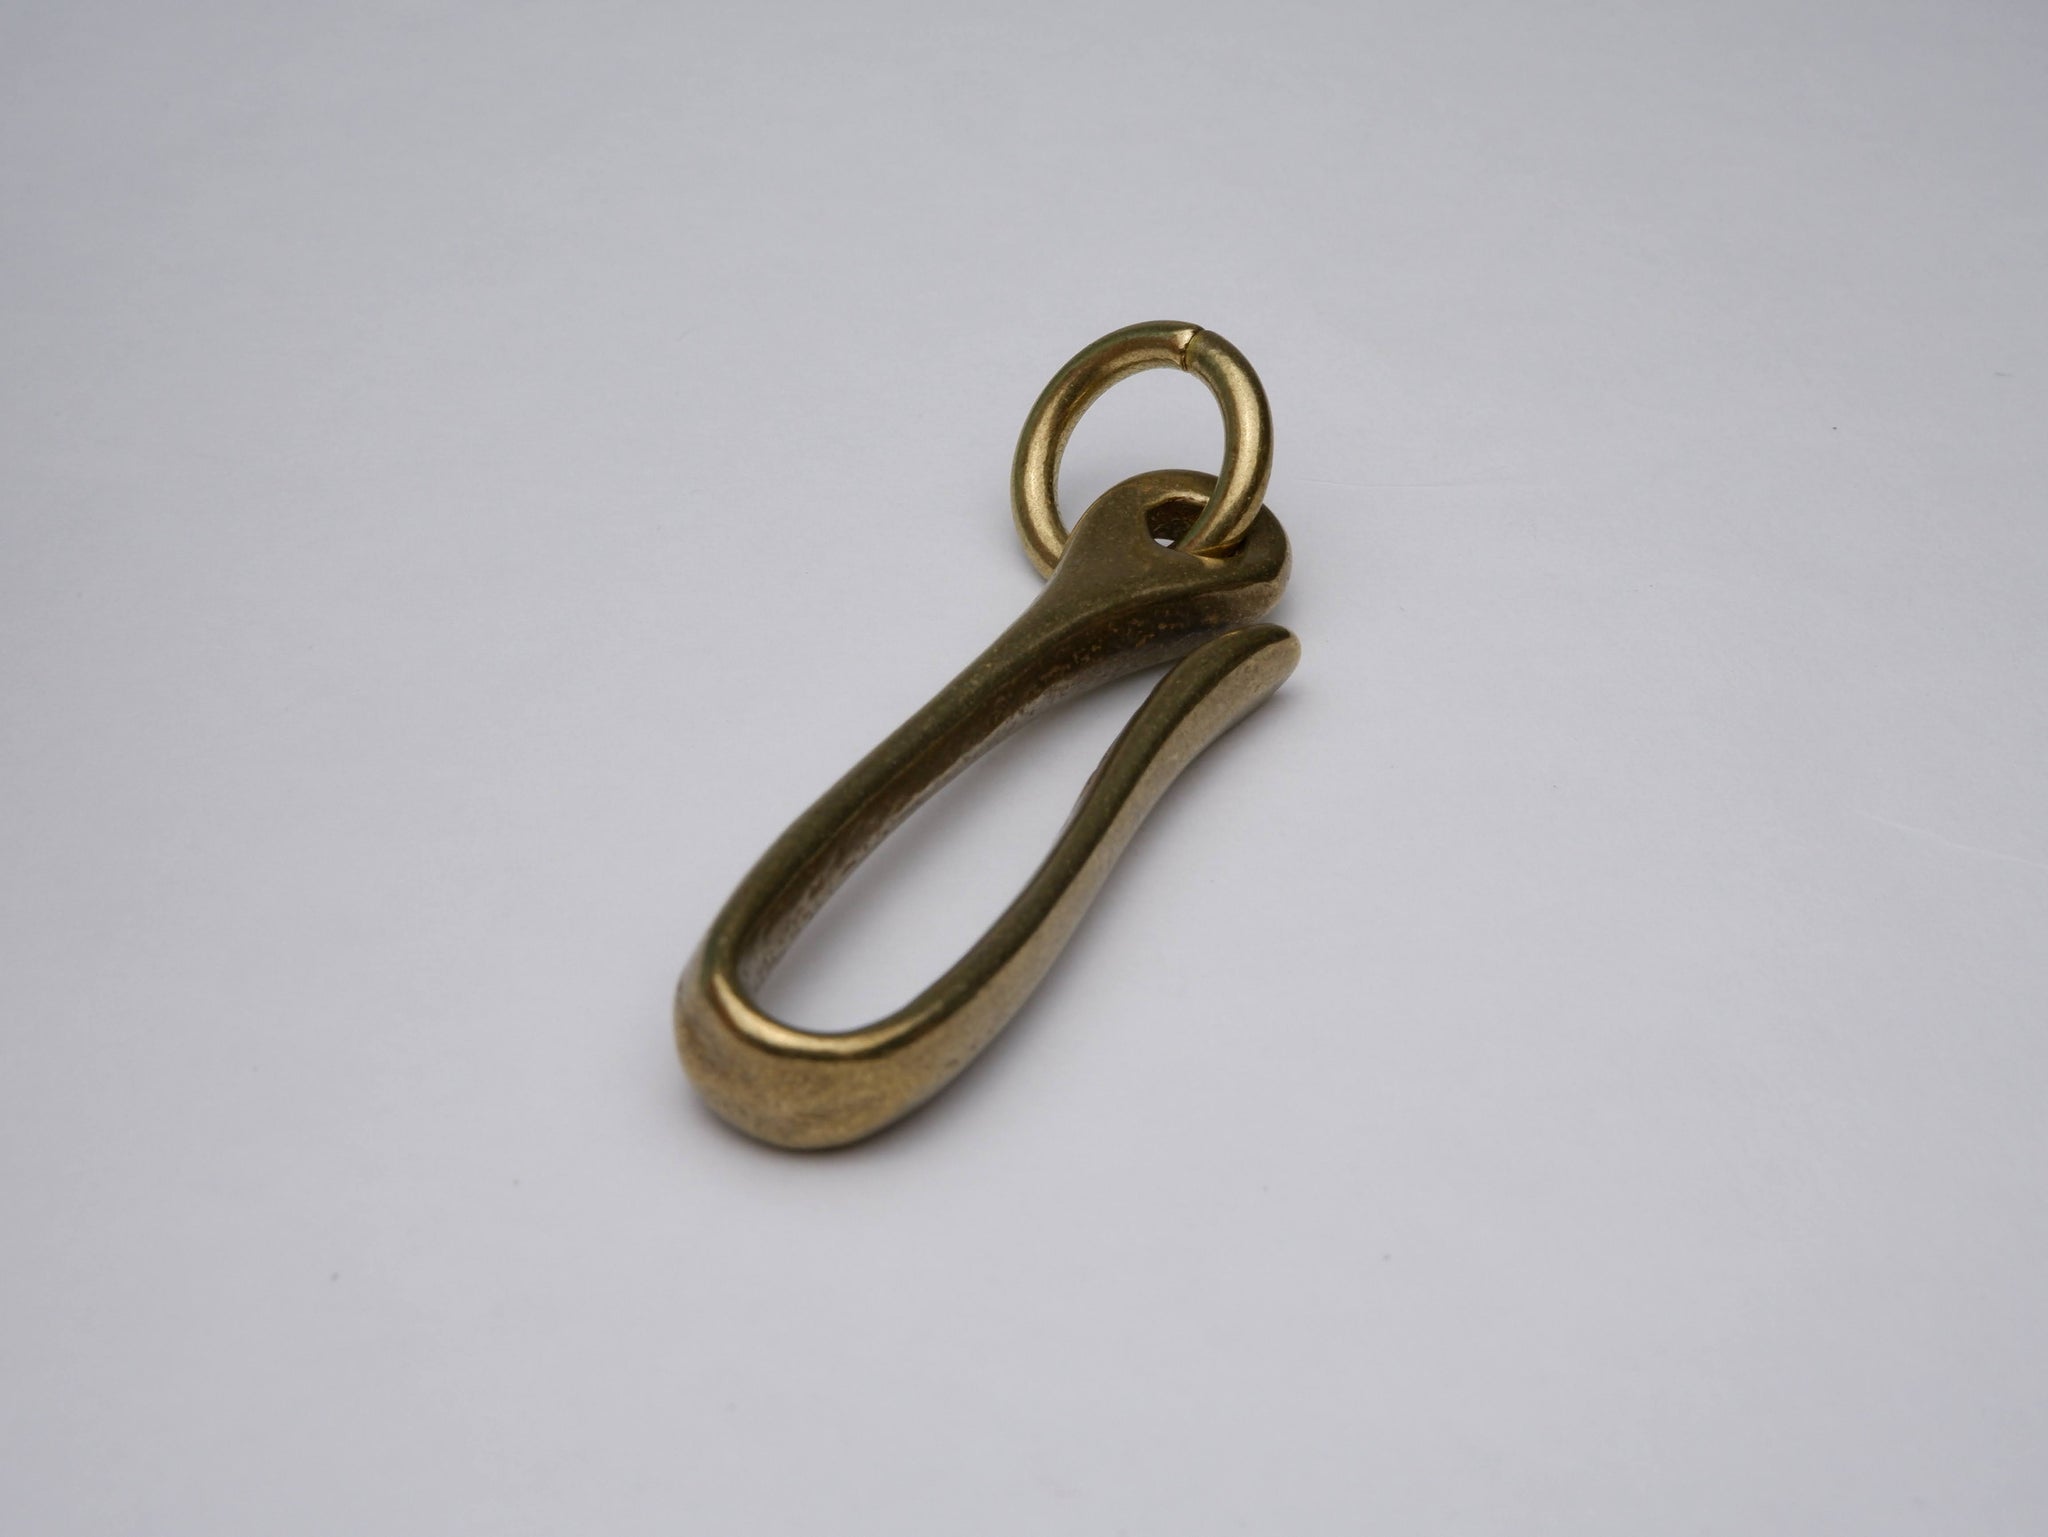 Kyoshin Elle - Japanese Brass Fish Hook Key Chain / Jump Ring and Hook (59.5mm) Medium